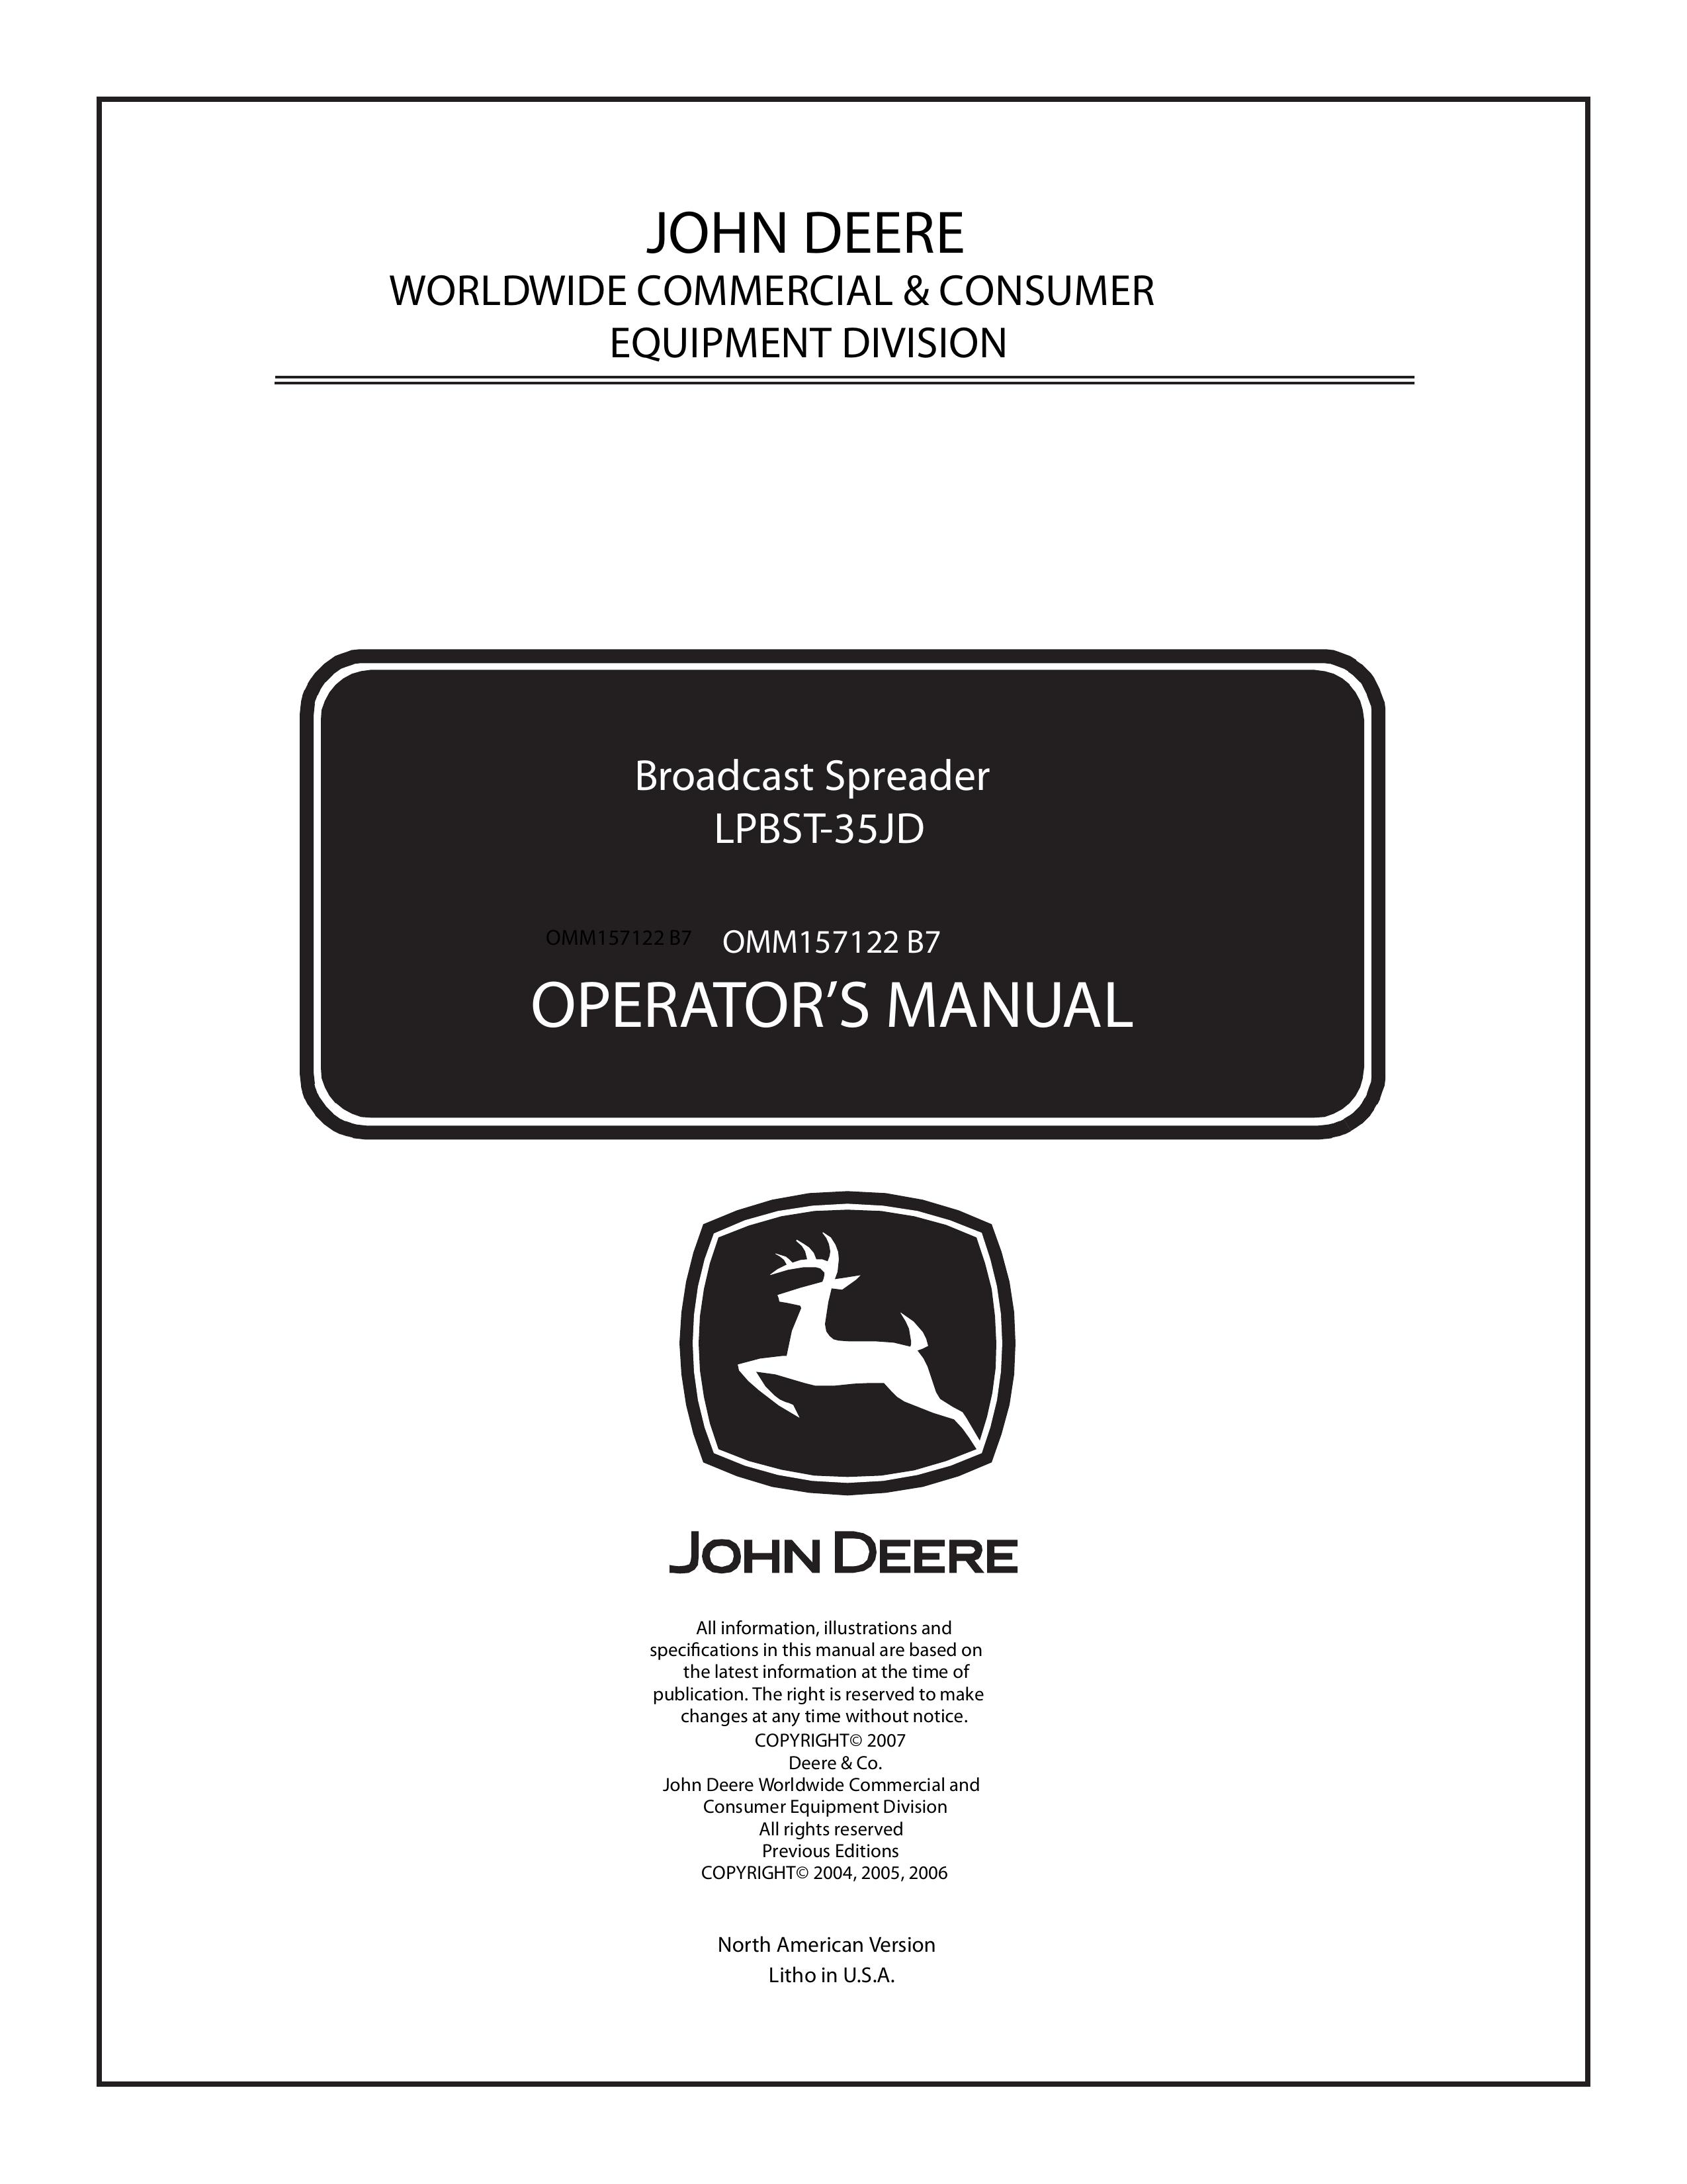 John Deere LPBST-35JD Spreader User Manual